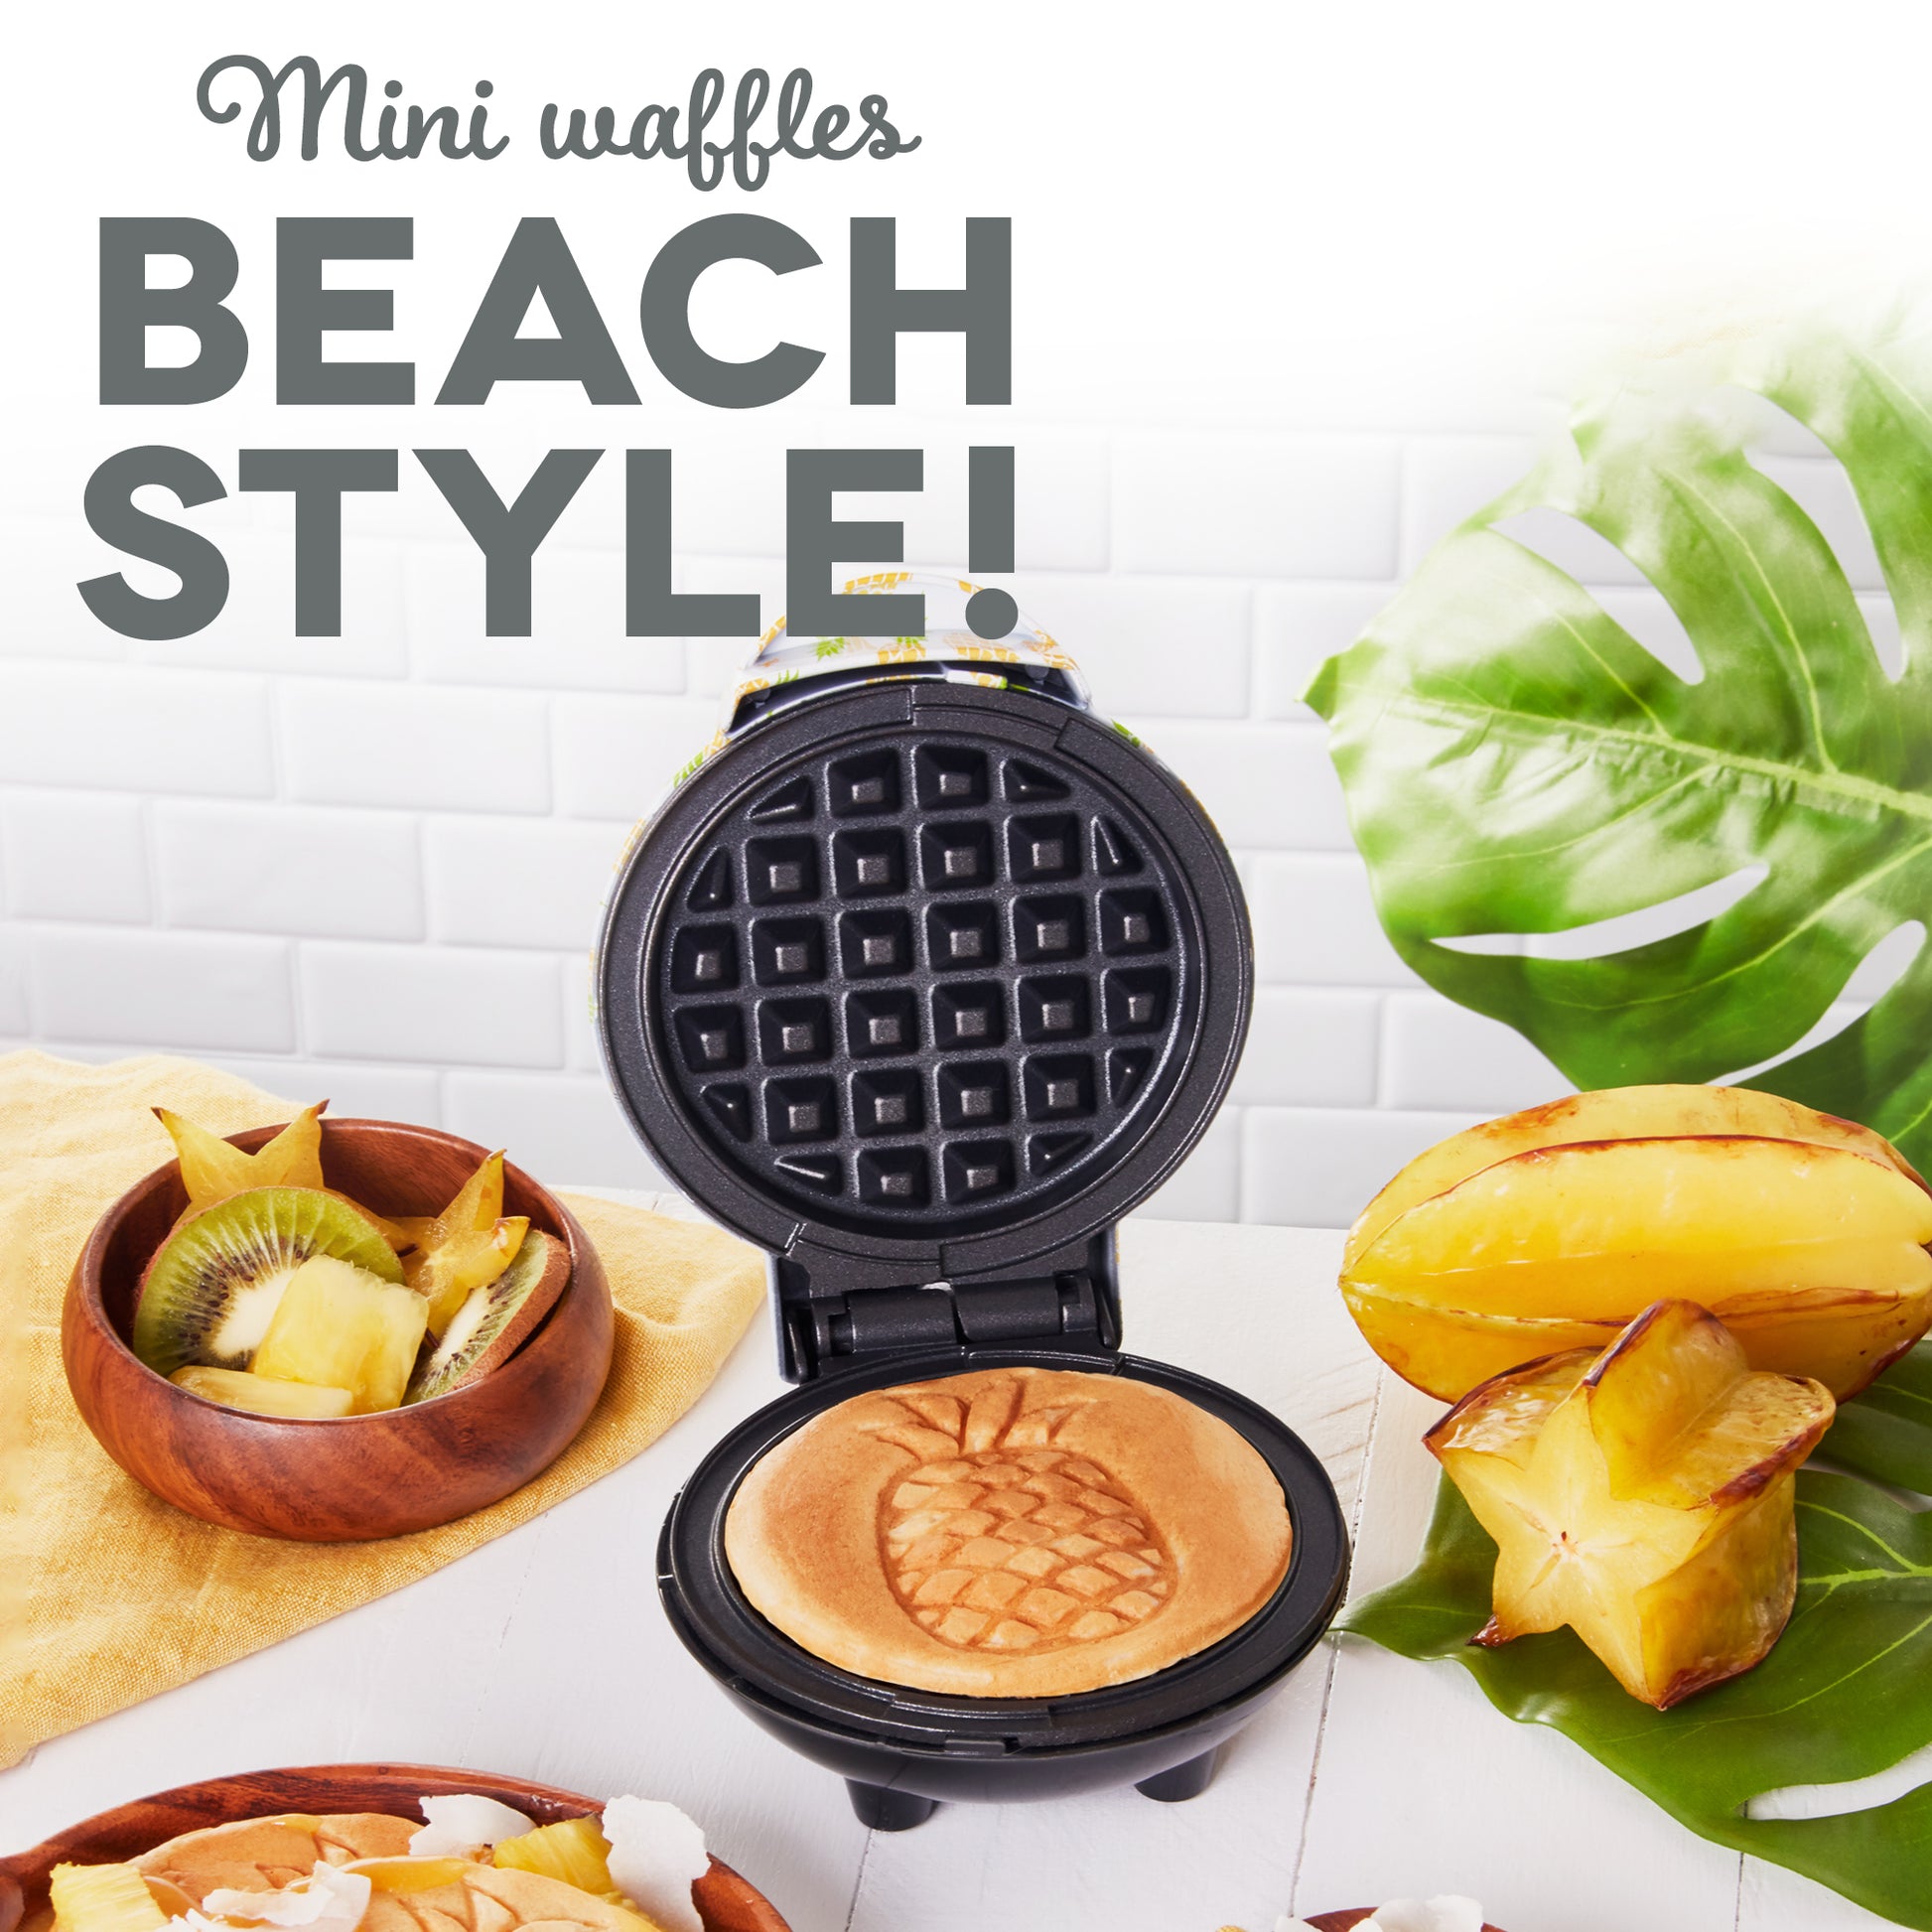 Dash Easter Egg Mini Waffle Maker, Green